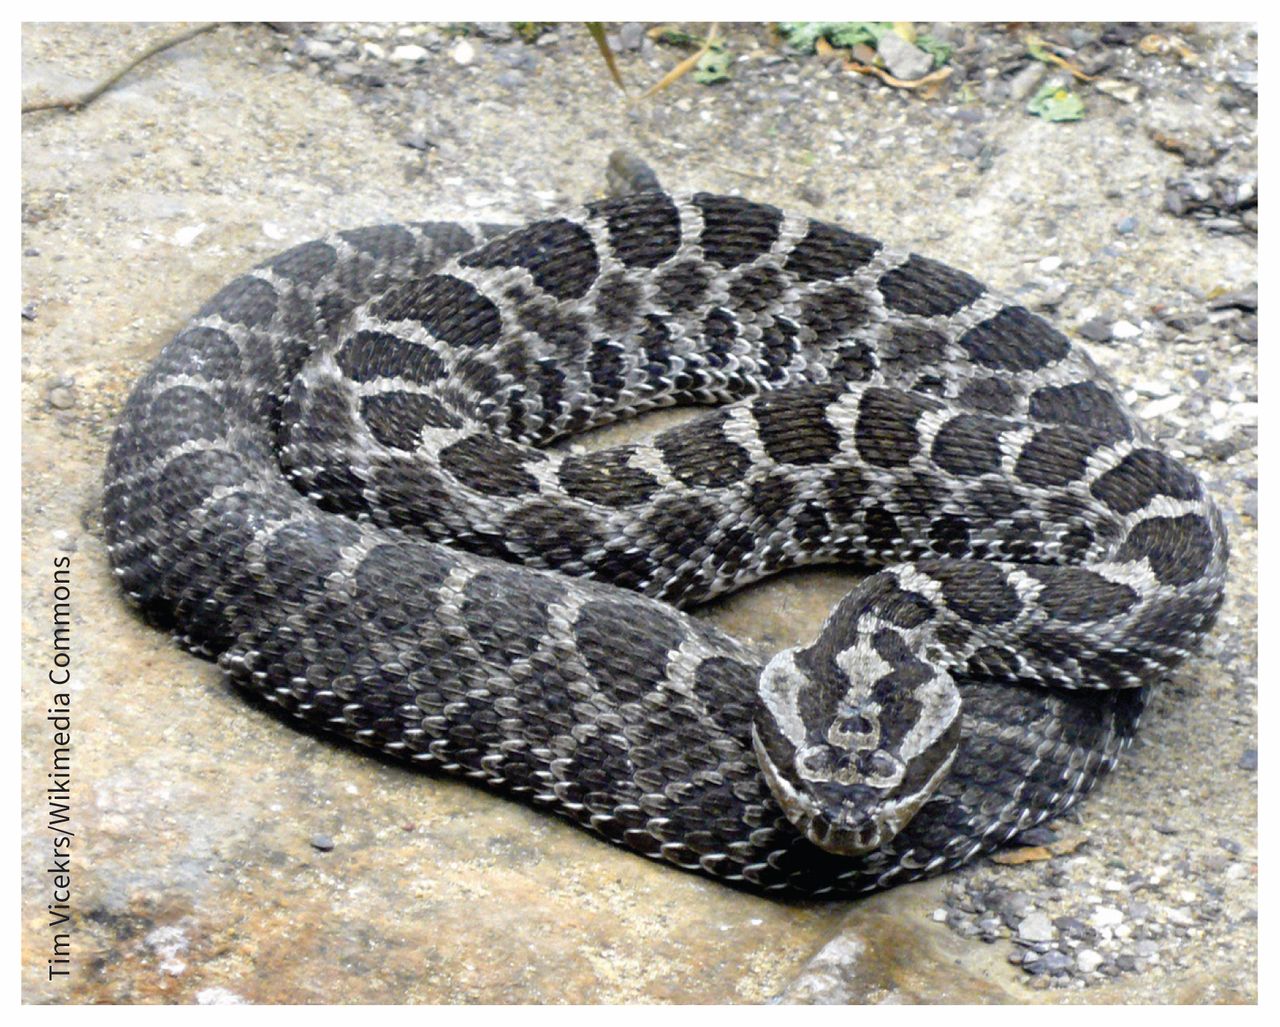 Is the Massasauga Rattlesnake Poisonous?